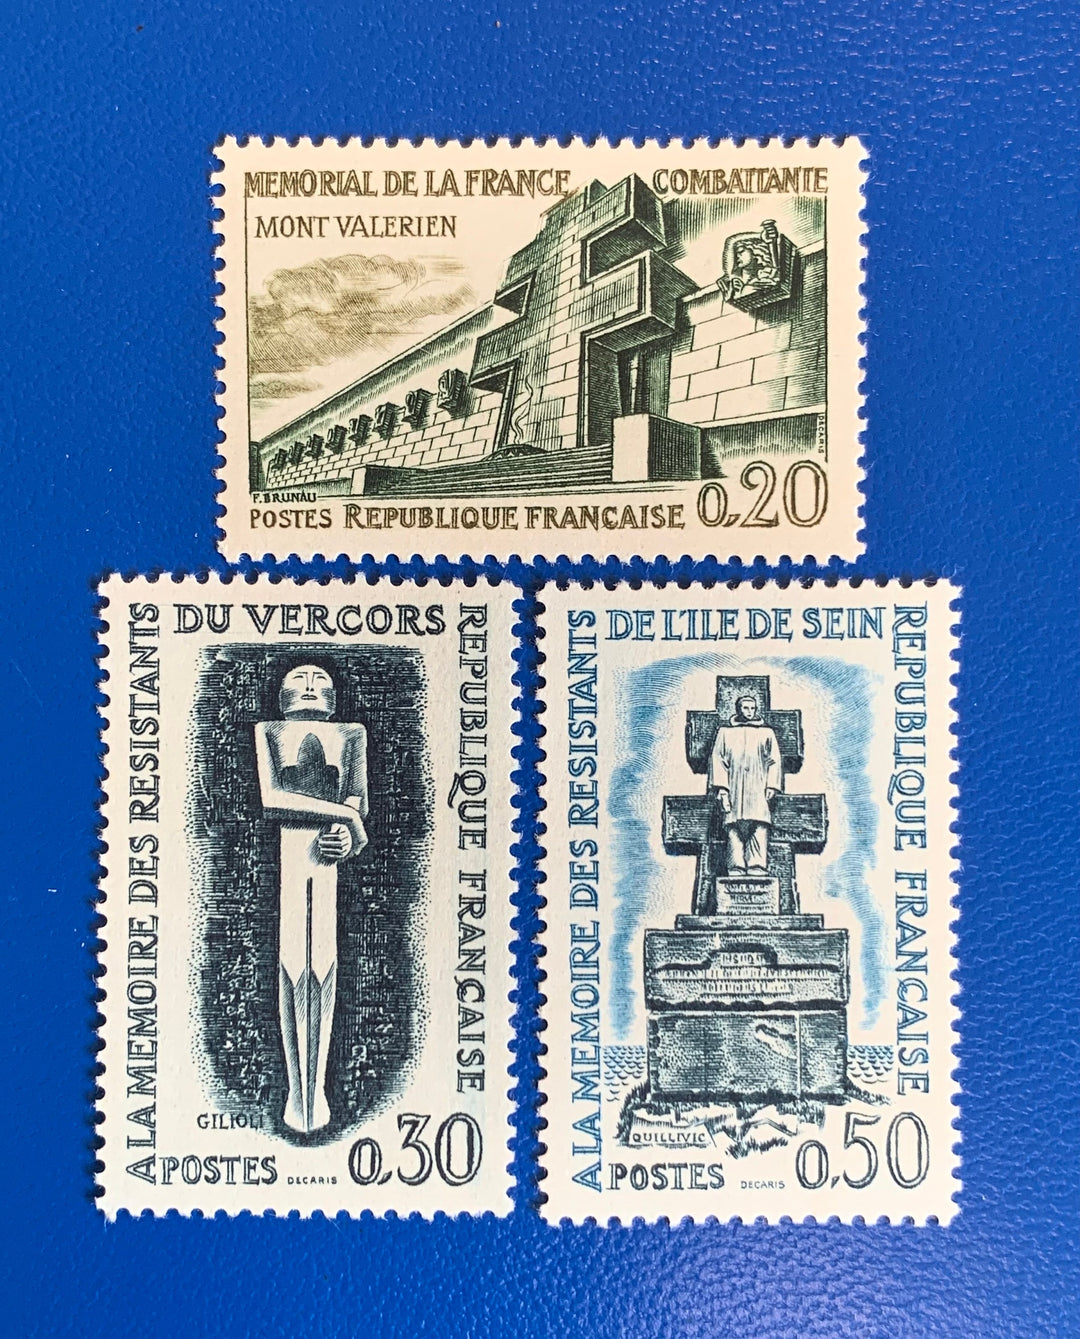 France - Original Vintage Postage Stamps- 1940 - Resistance Fighters Memorial - for the collector, artist or crafter